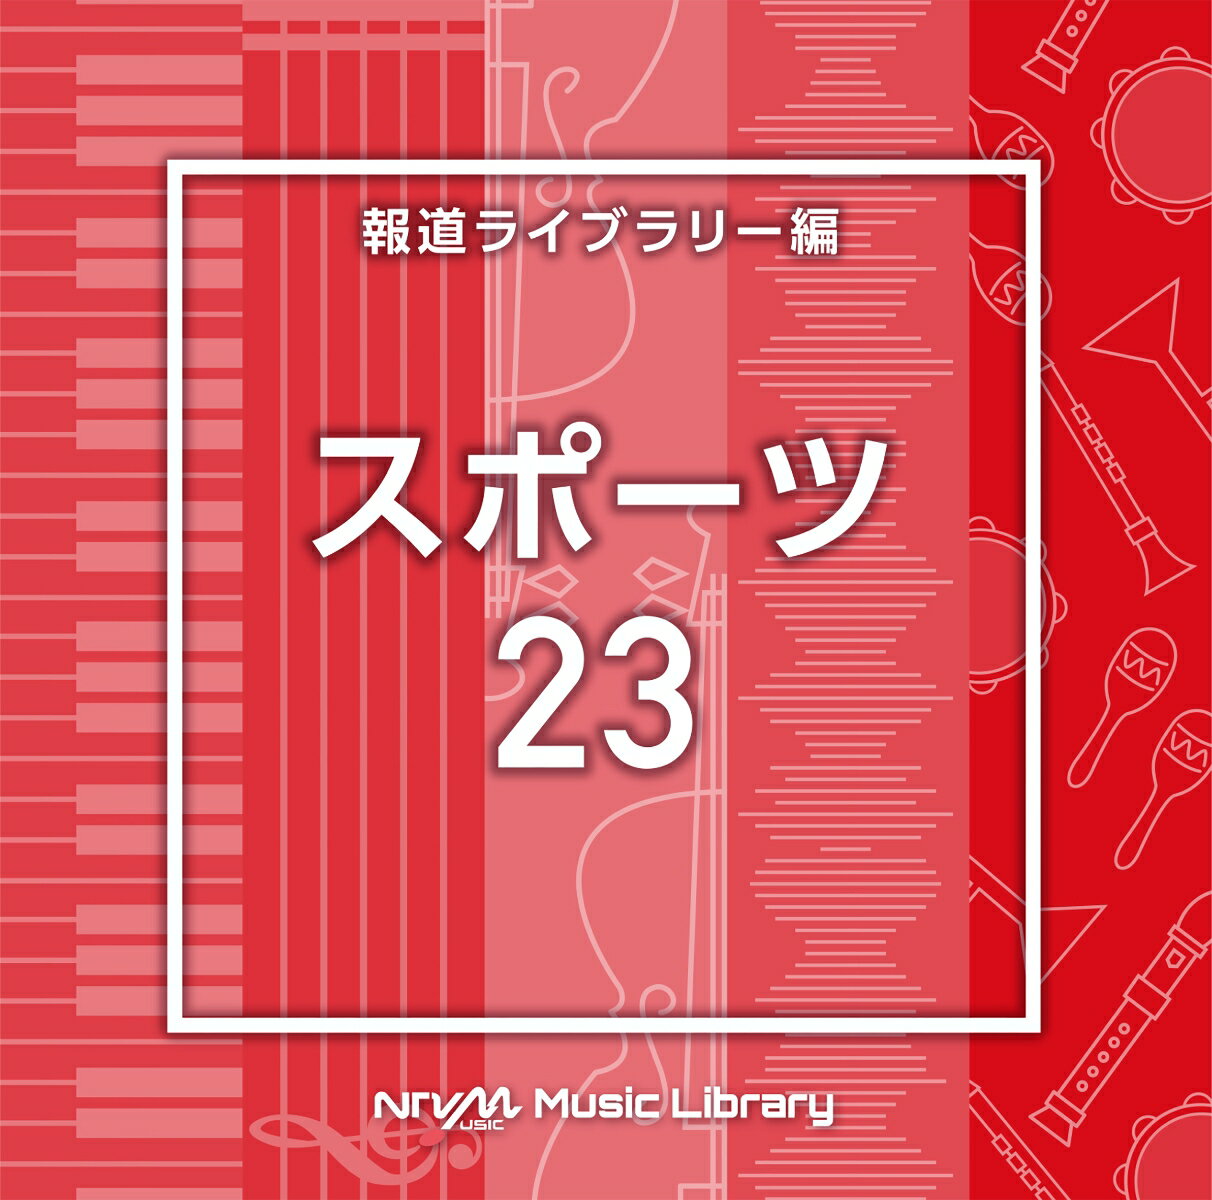 NTVM Music Library 報道ライブラリー編 スポーツ23